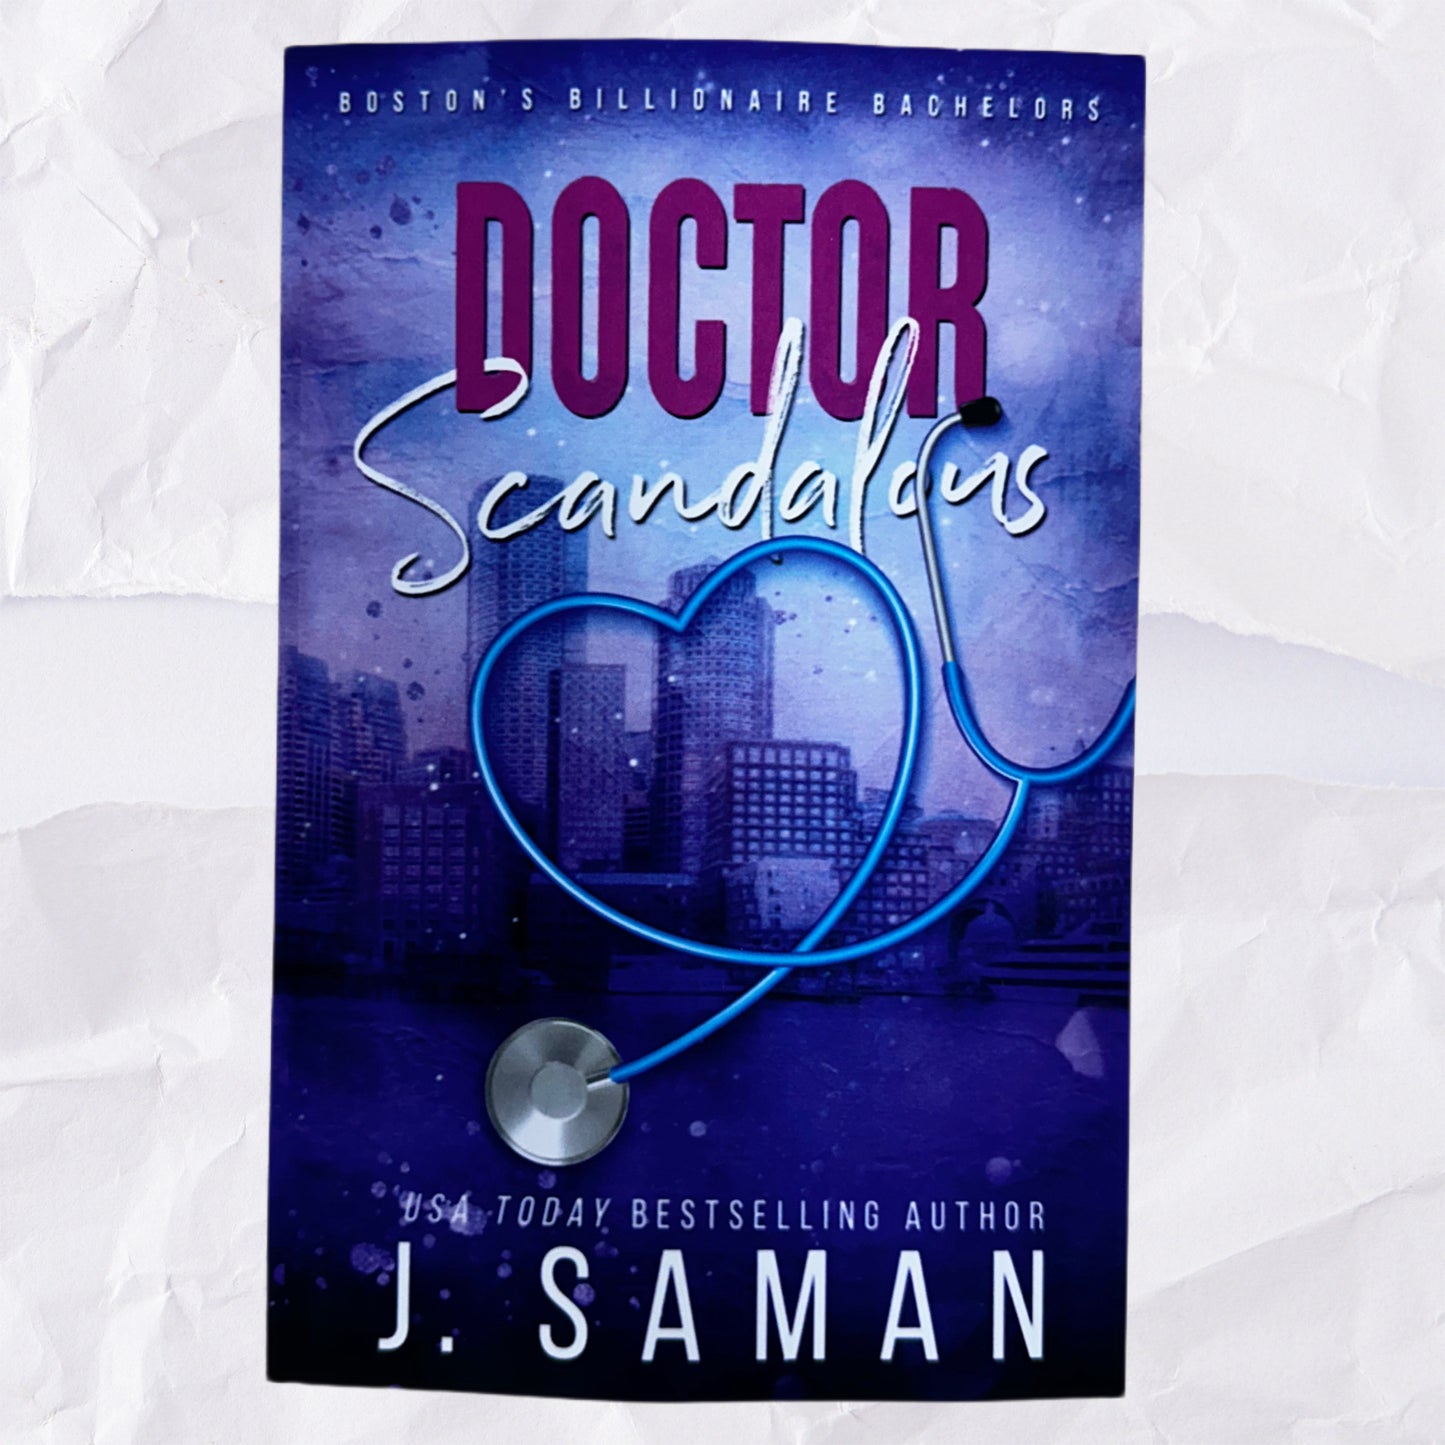 Doctor Scandalous (Boston's Billionaire Bachelors #1) by J. Saman